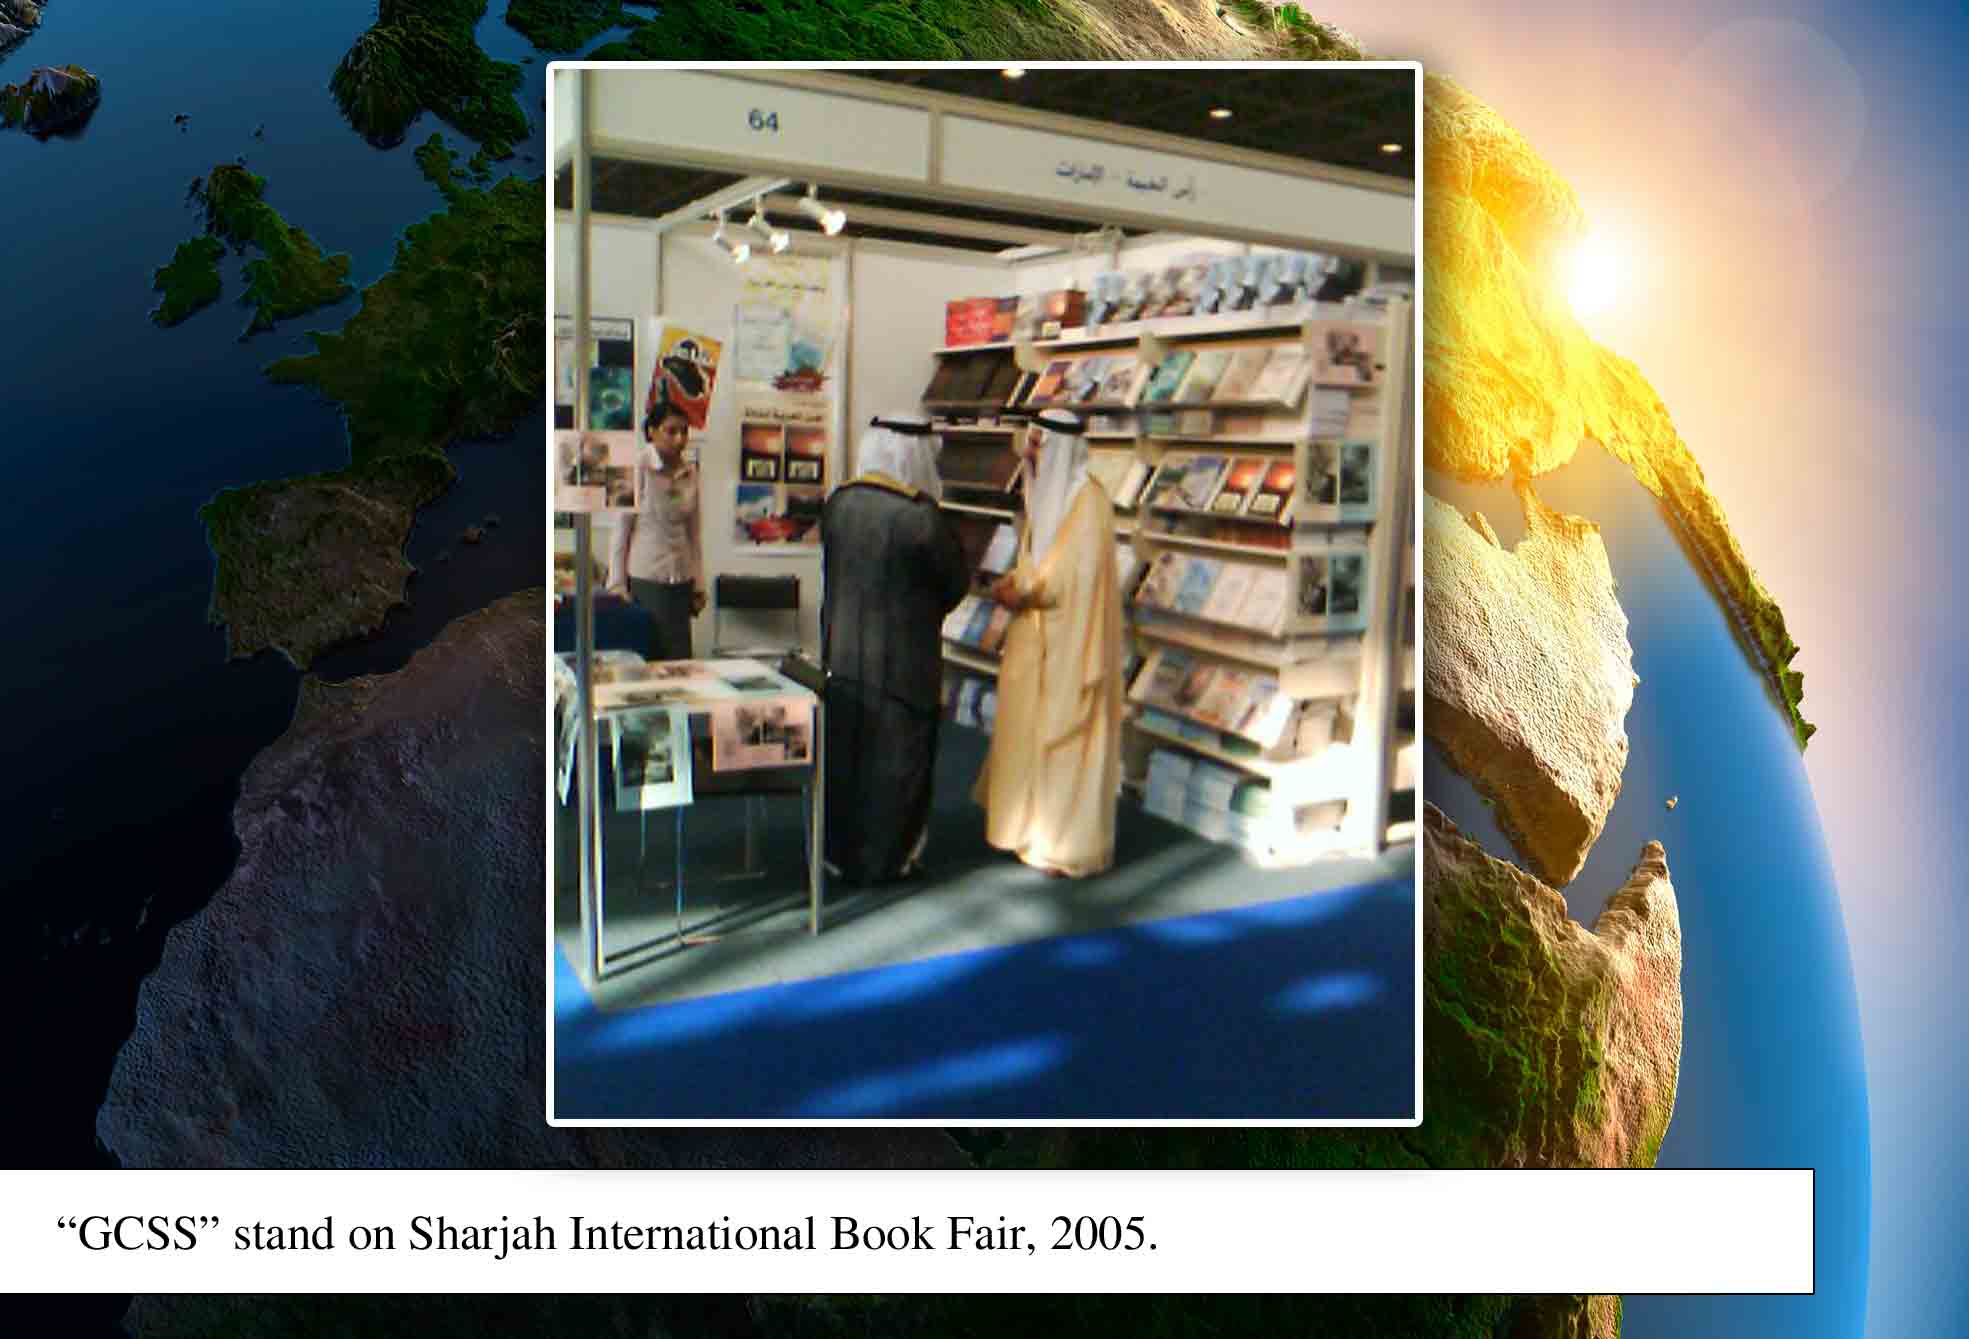  GCSS at Sharjah Book Fair 2005